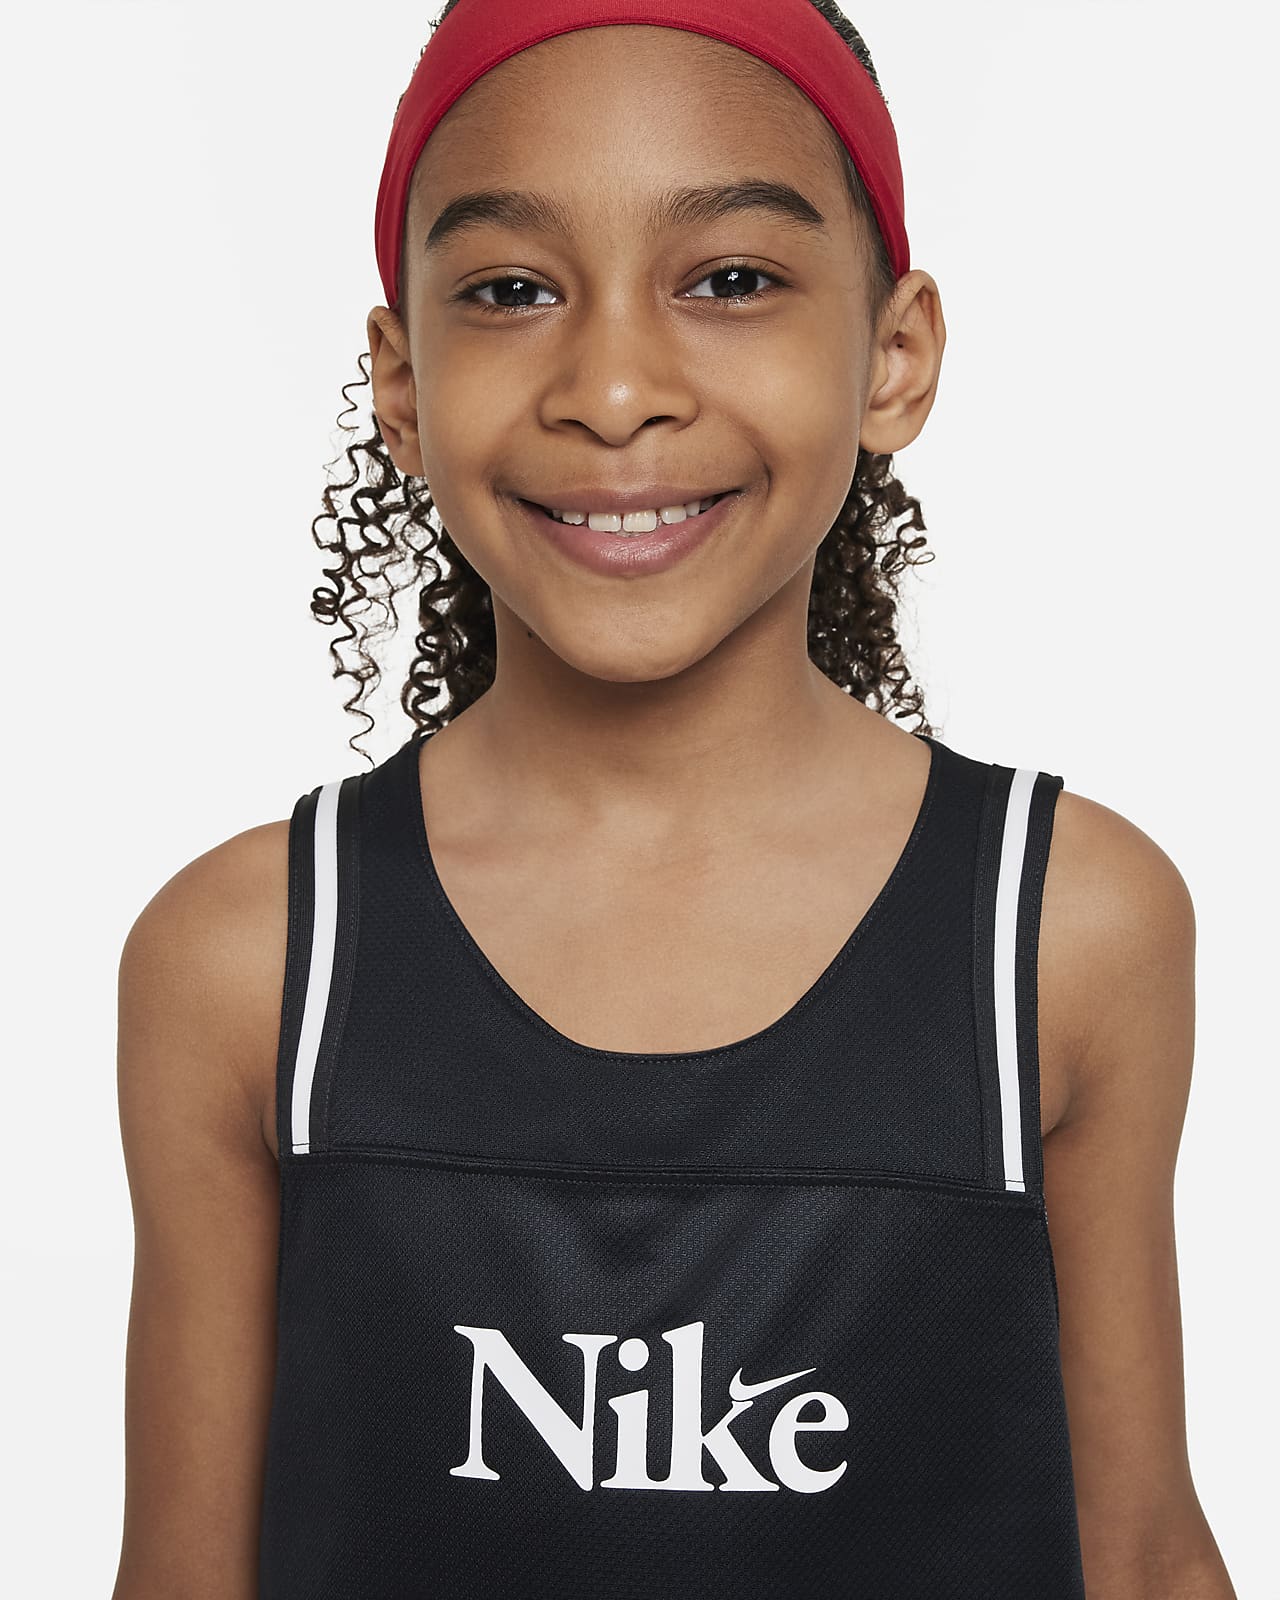 Nike Culture of Basketball Older Kids' Reversible Basketball Jersey - Black